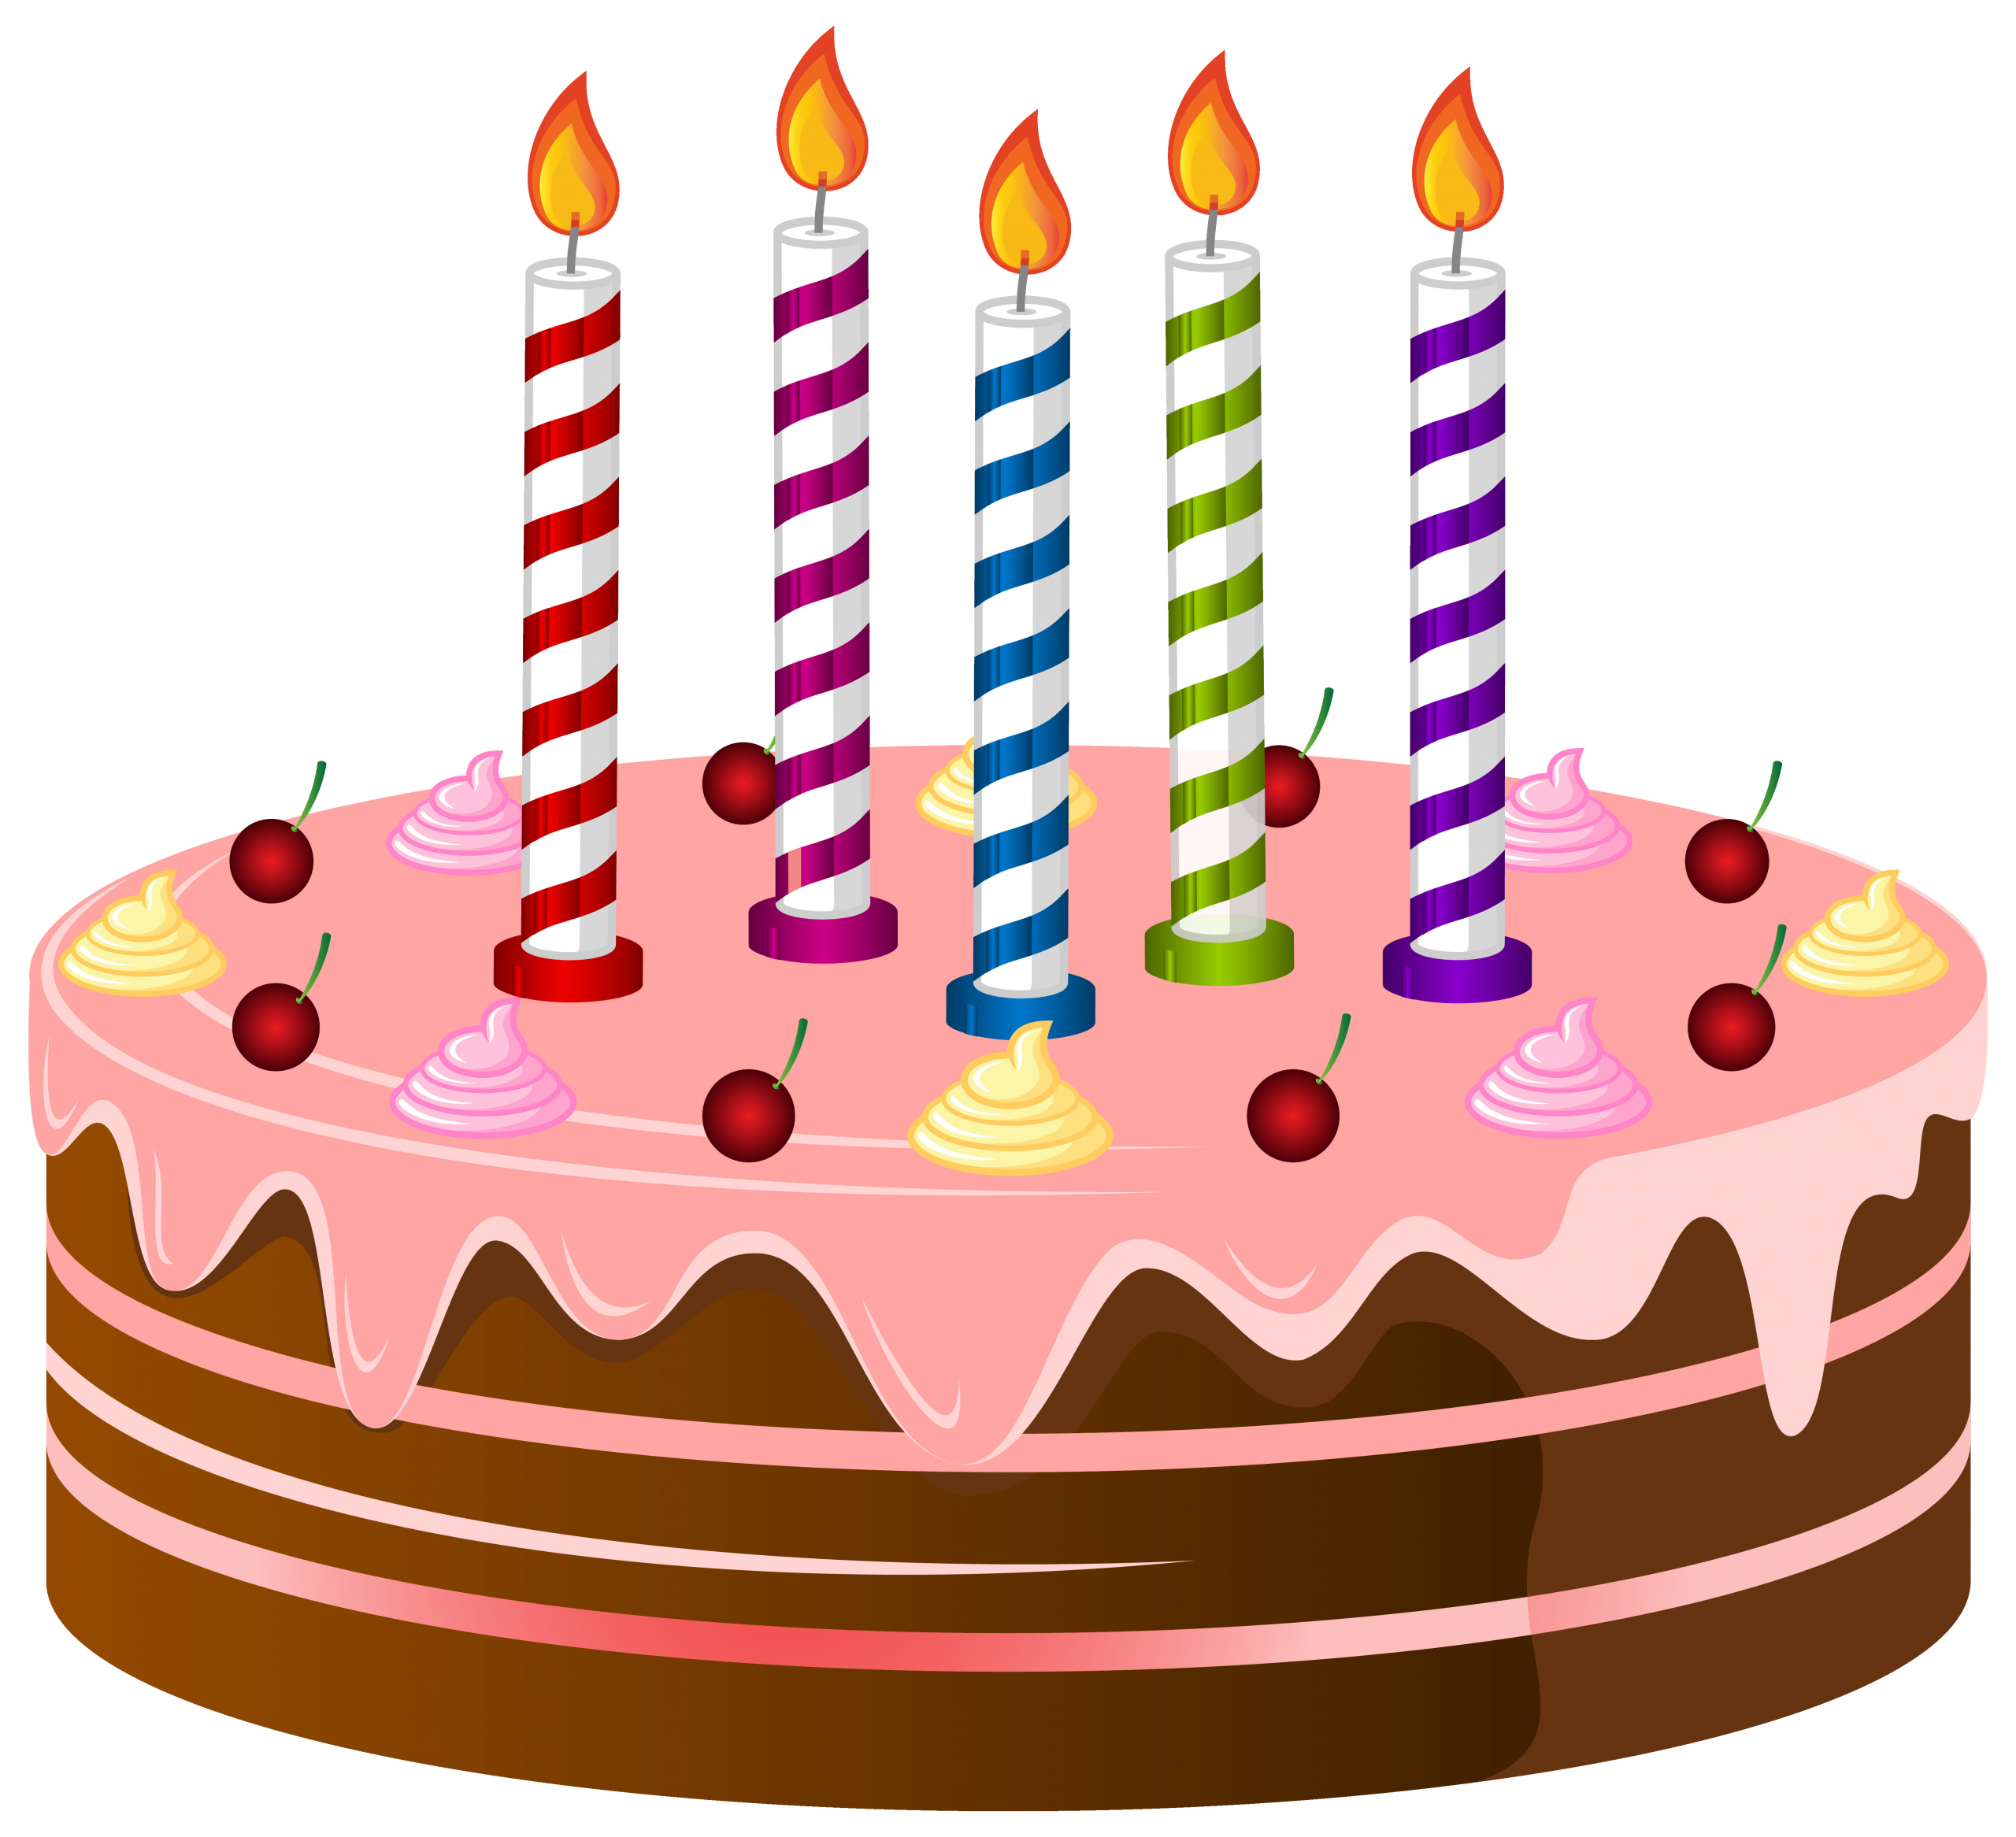 Free Birthday Cake Clip Art
 Birthday Cake Clip Art Free Download Clip Art